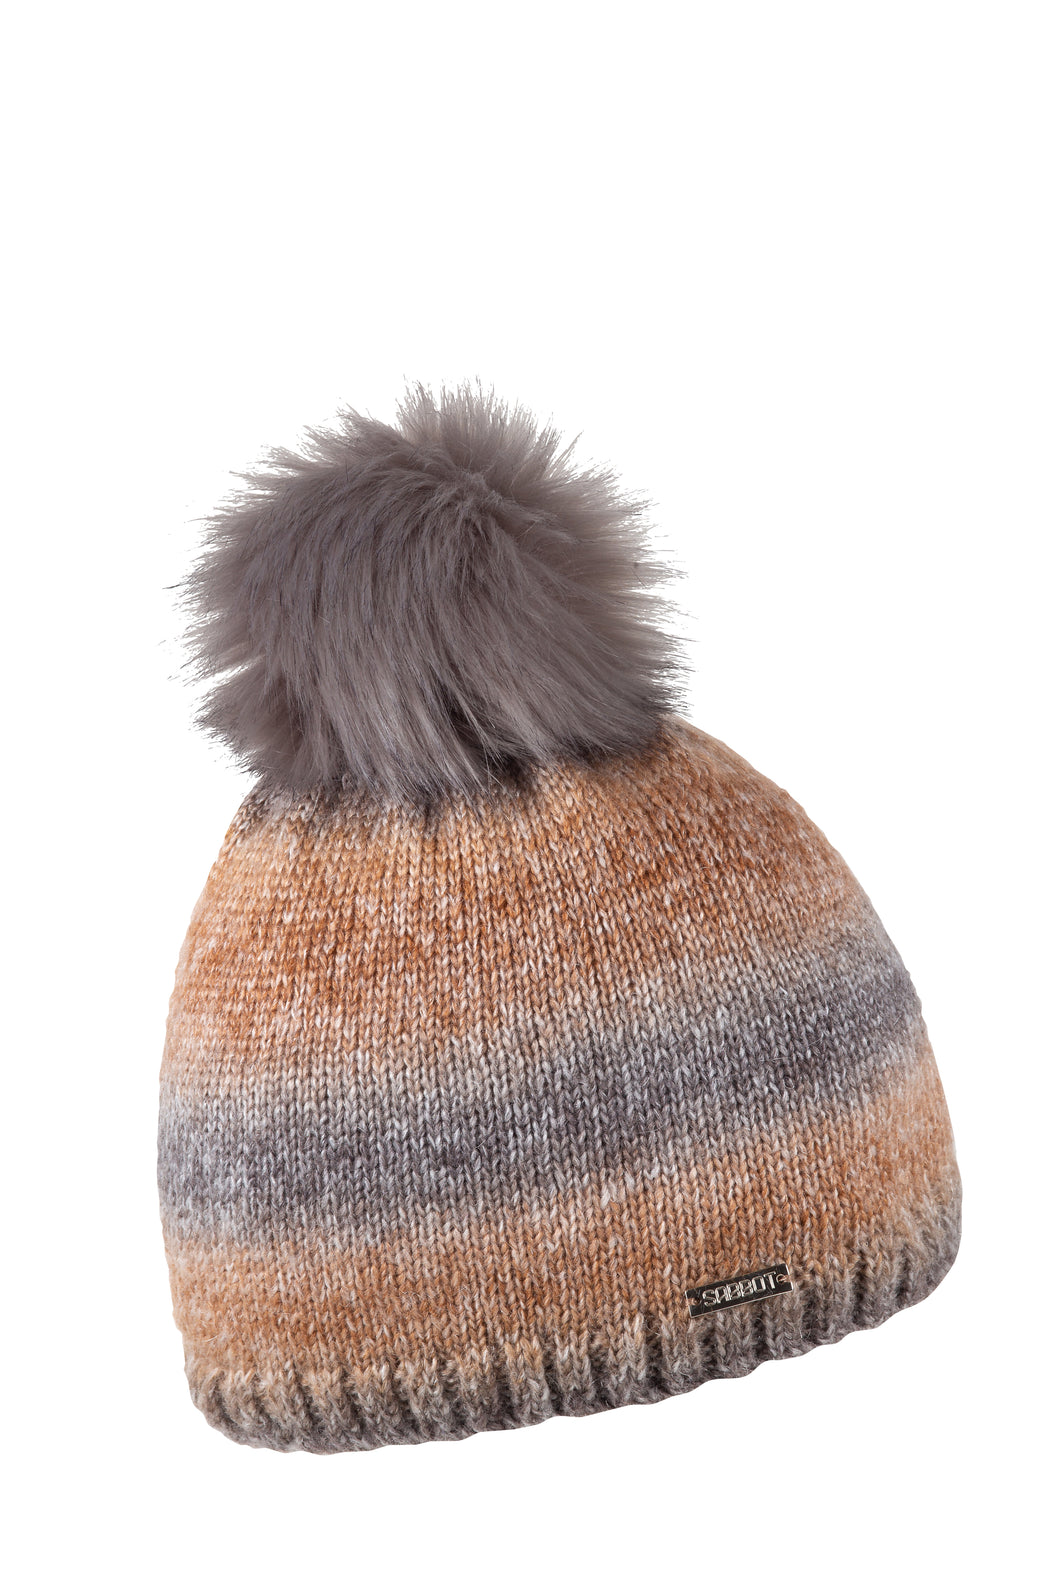 Sabbot Ladies Winter Fleece Lined Beanie Hat. Karla. Earth.